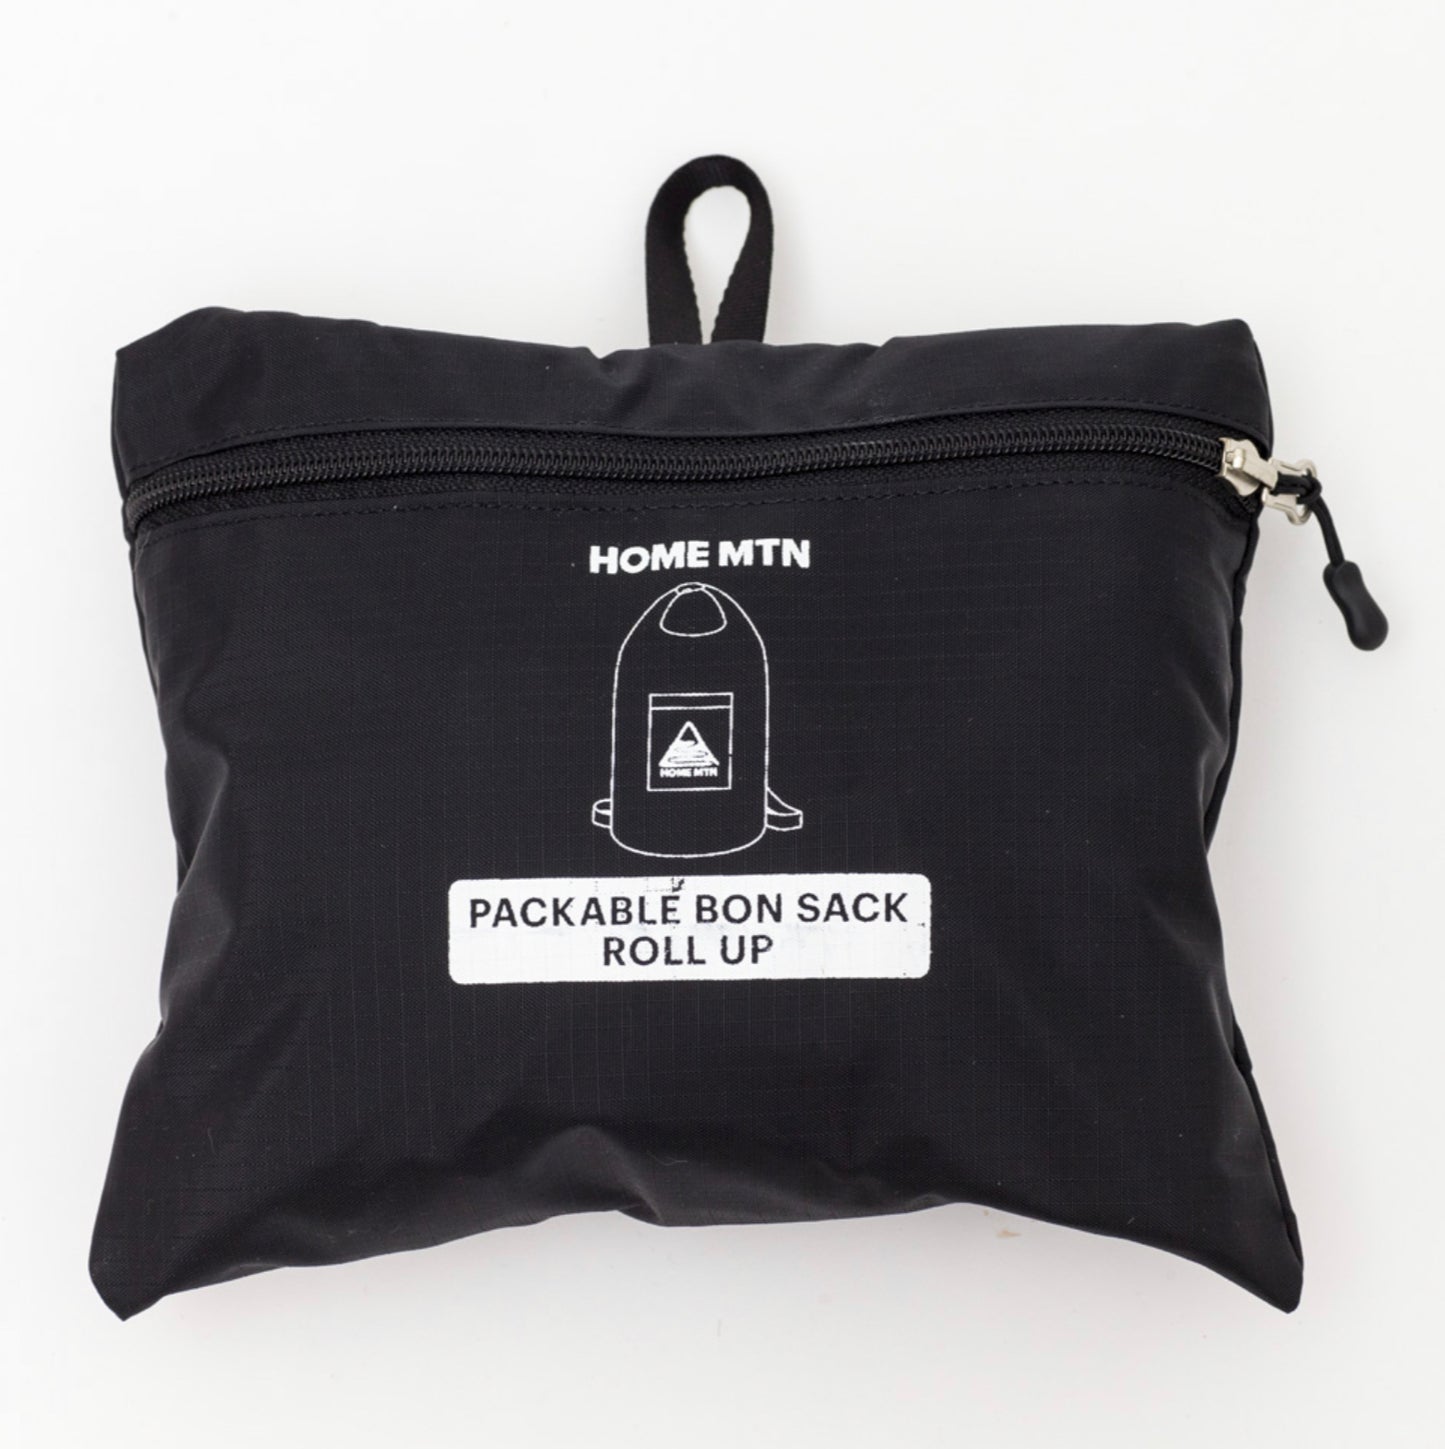 Home Mtn - Packable Bon Sack